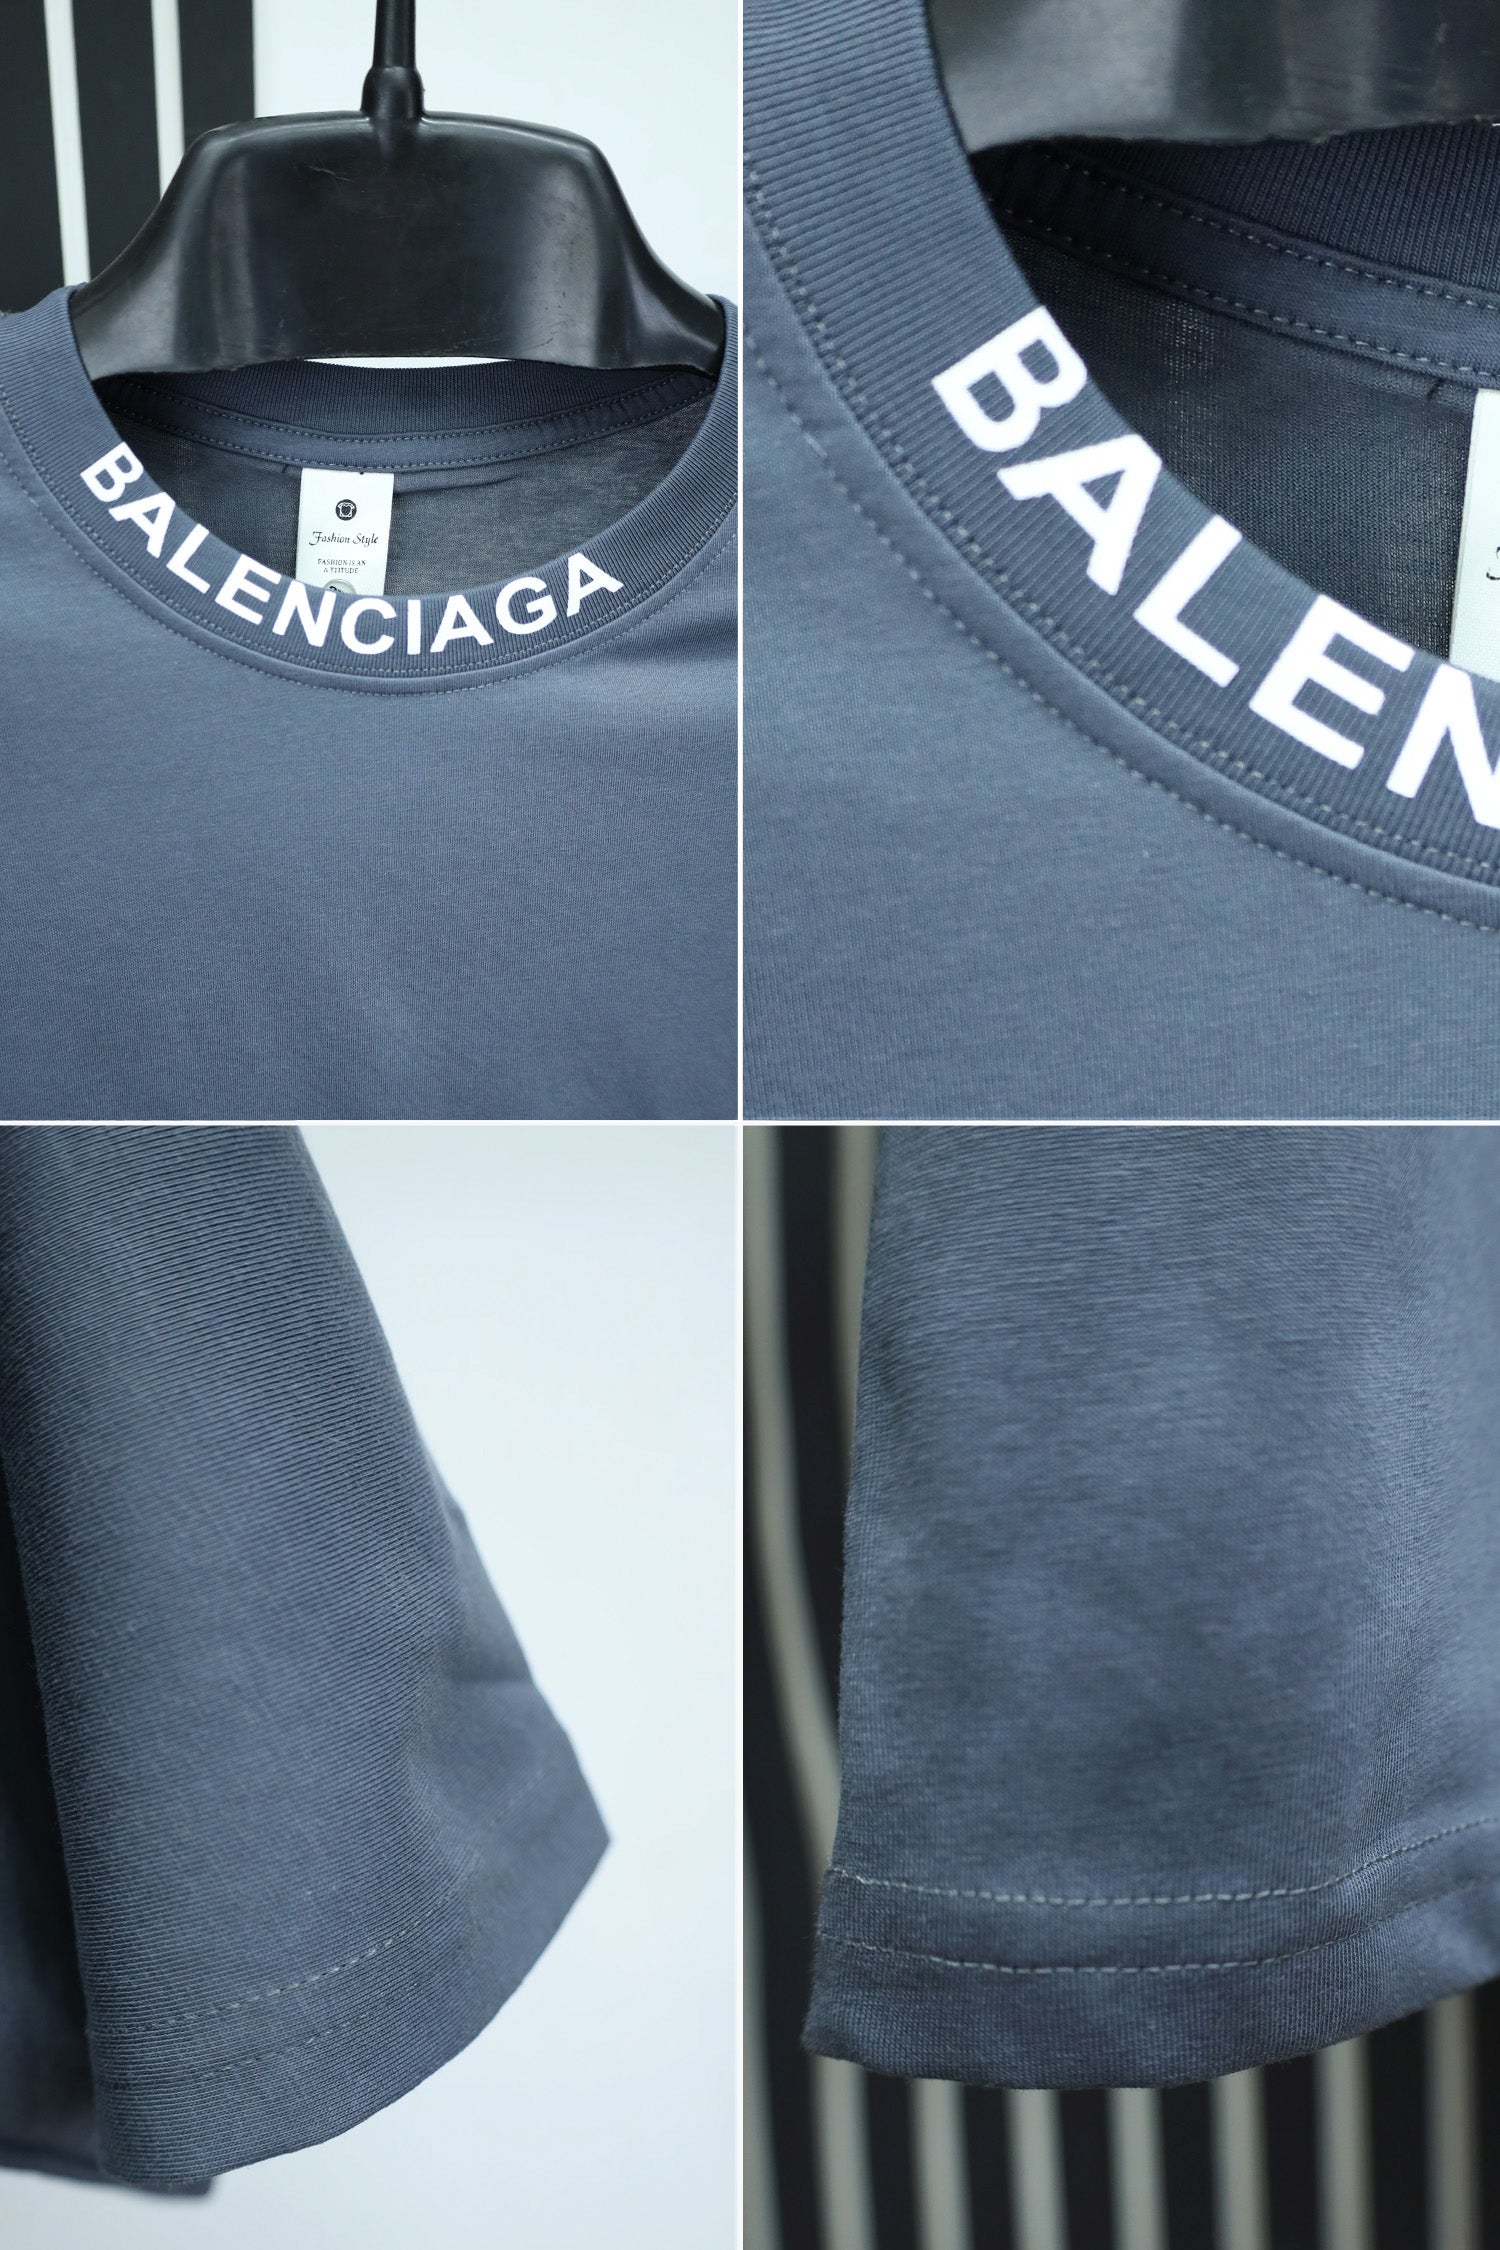 Balnciaga Slogan Oversized T-Shirt